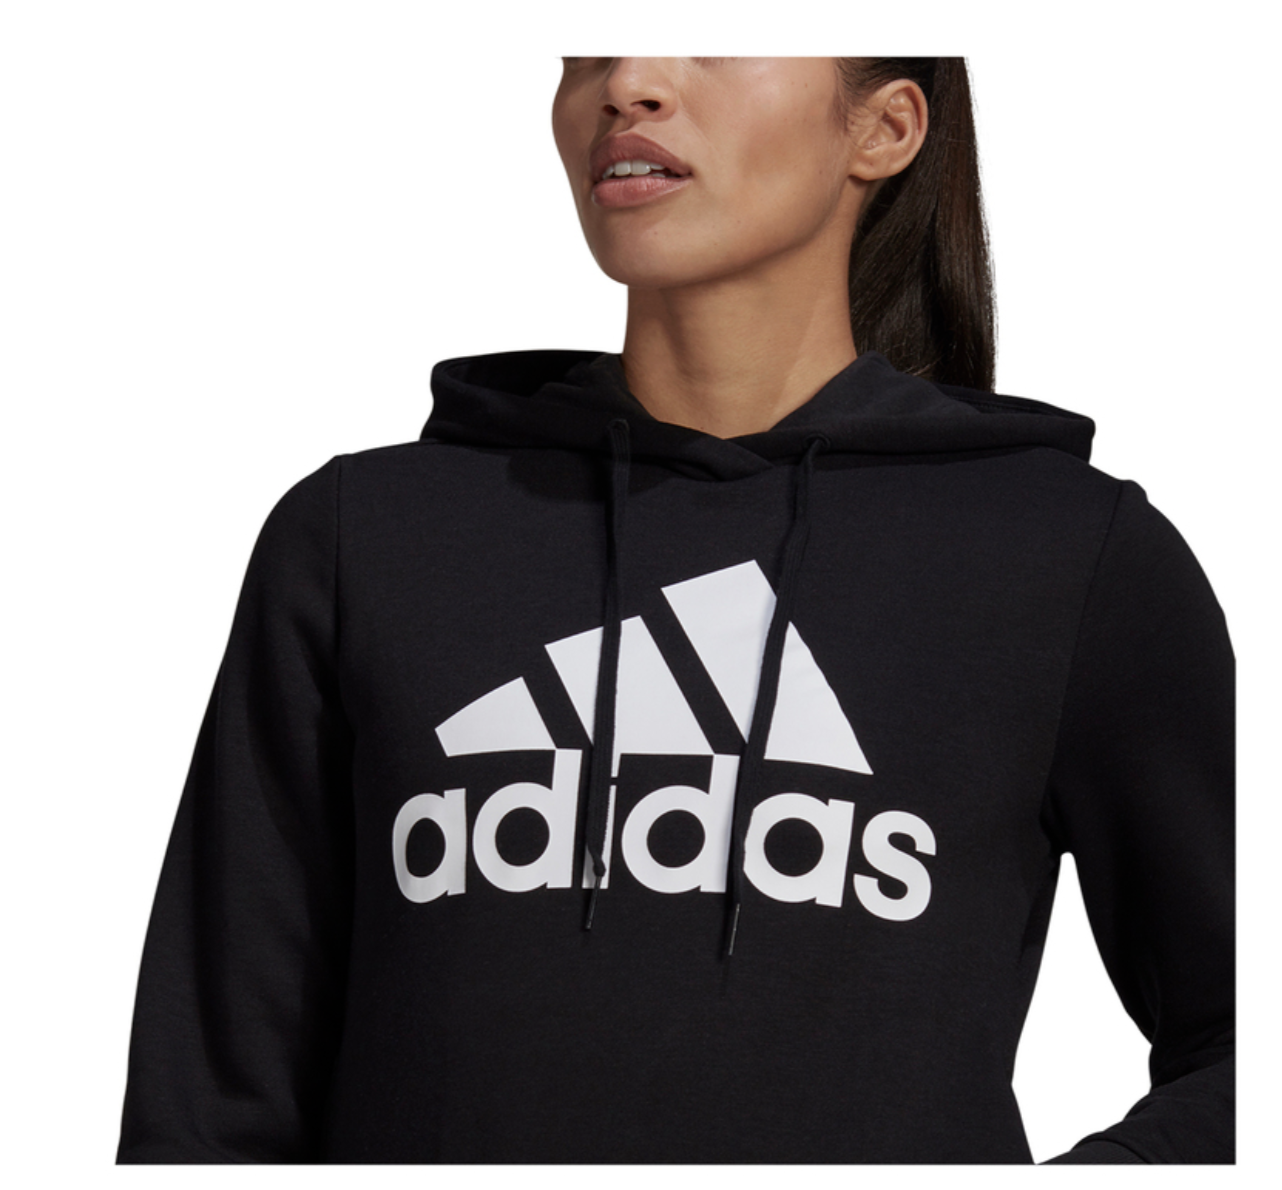 Adidas Women's Hoodie Black with White logo